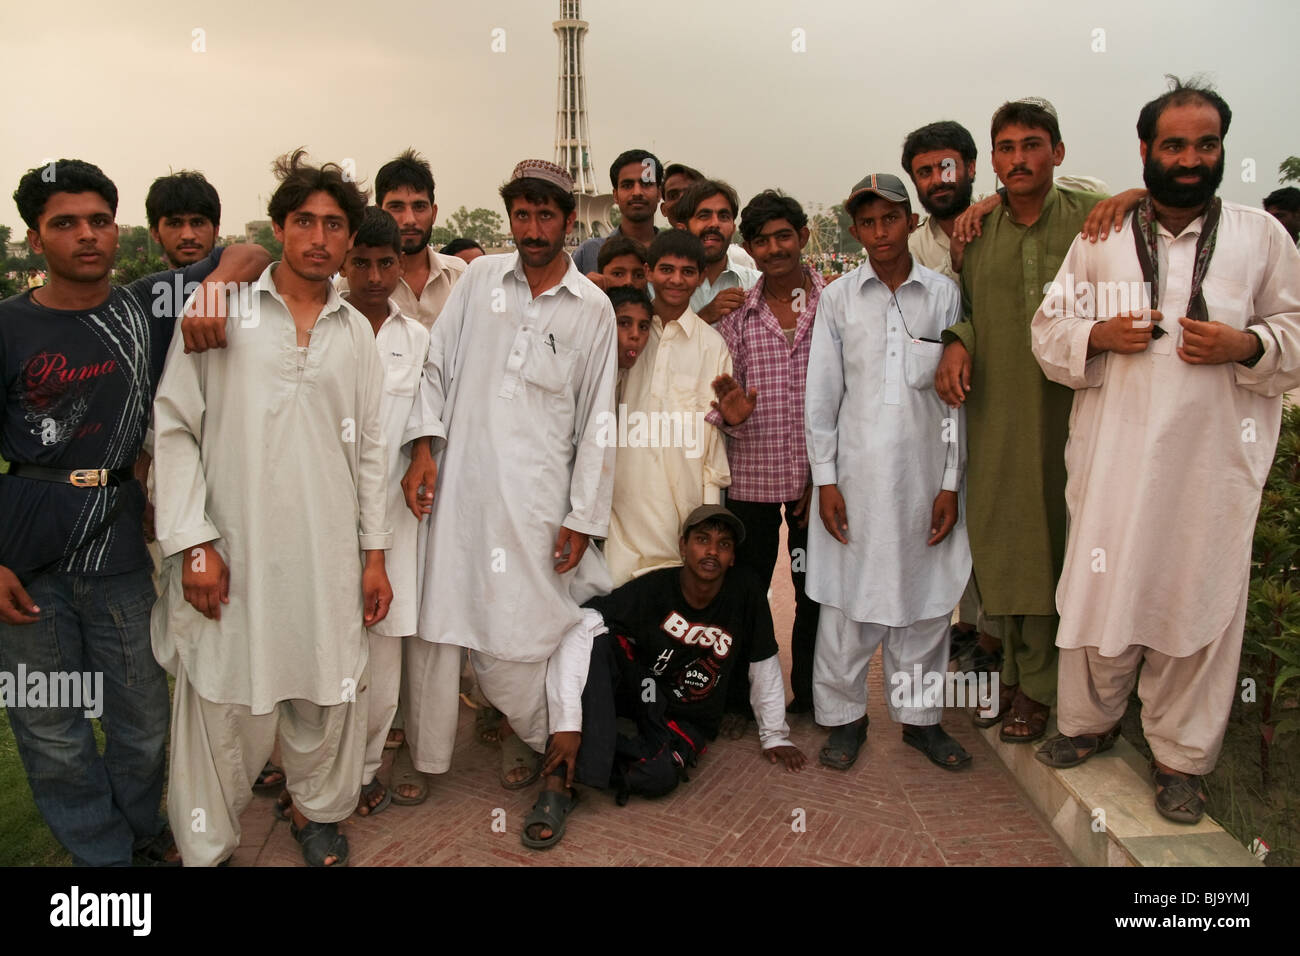 lahore-old-lahore-pakistan-punjab-street-young-men-BJ9YMJ.jpg